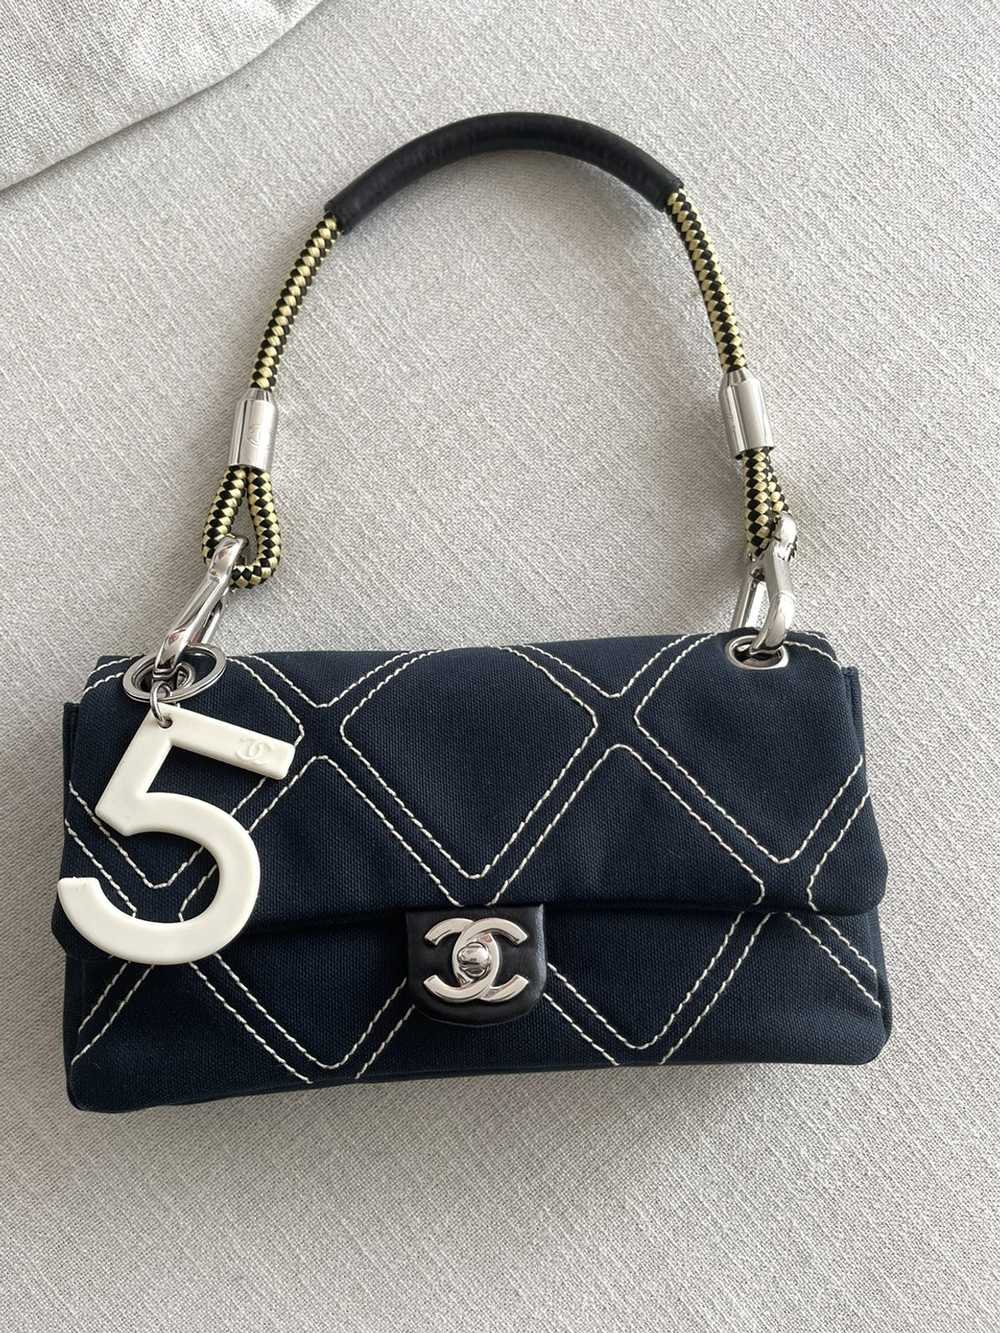 Chanel Rare Denim Chanel Bag + 5 Charm - image 4